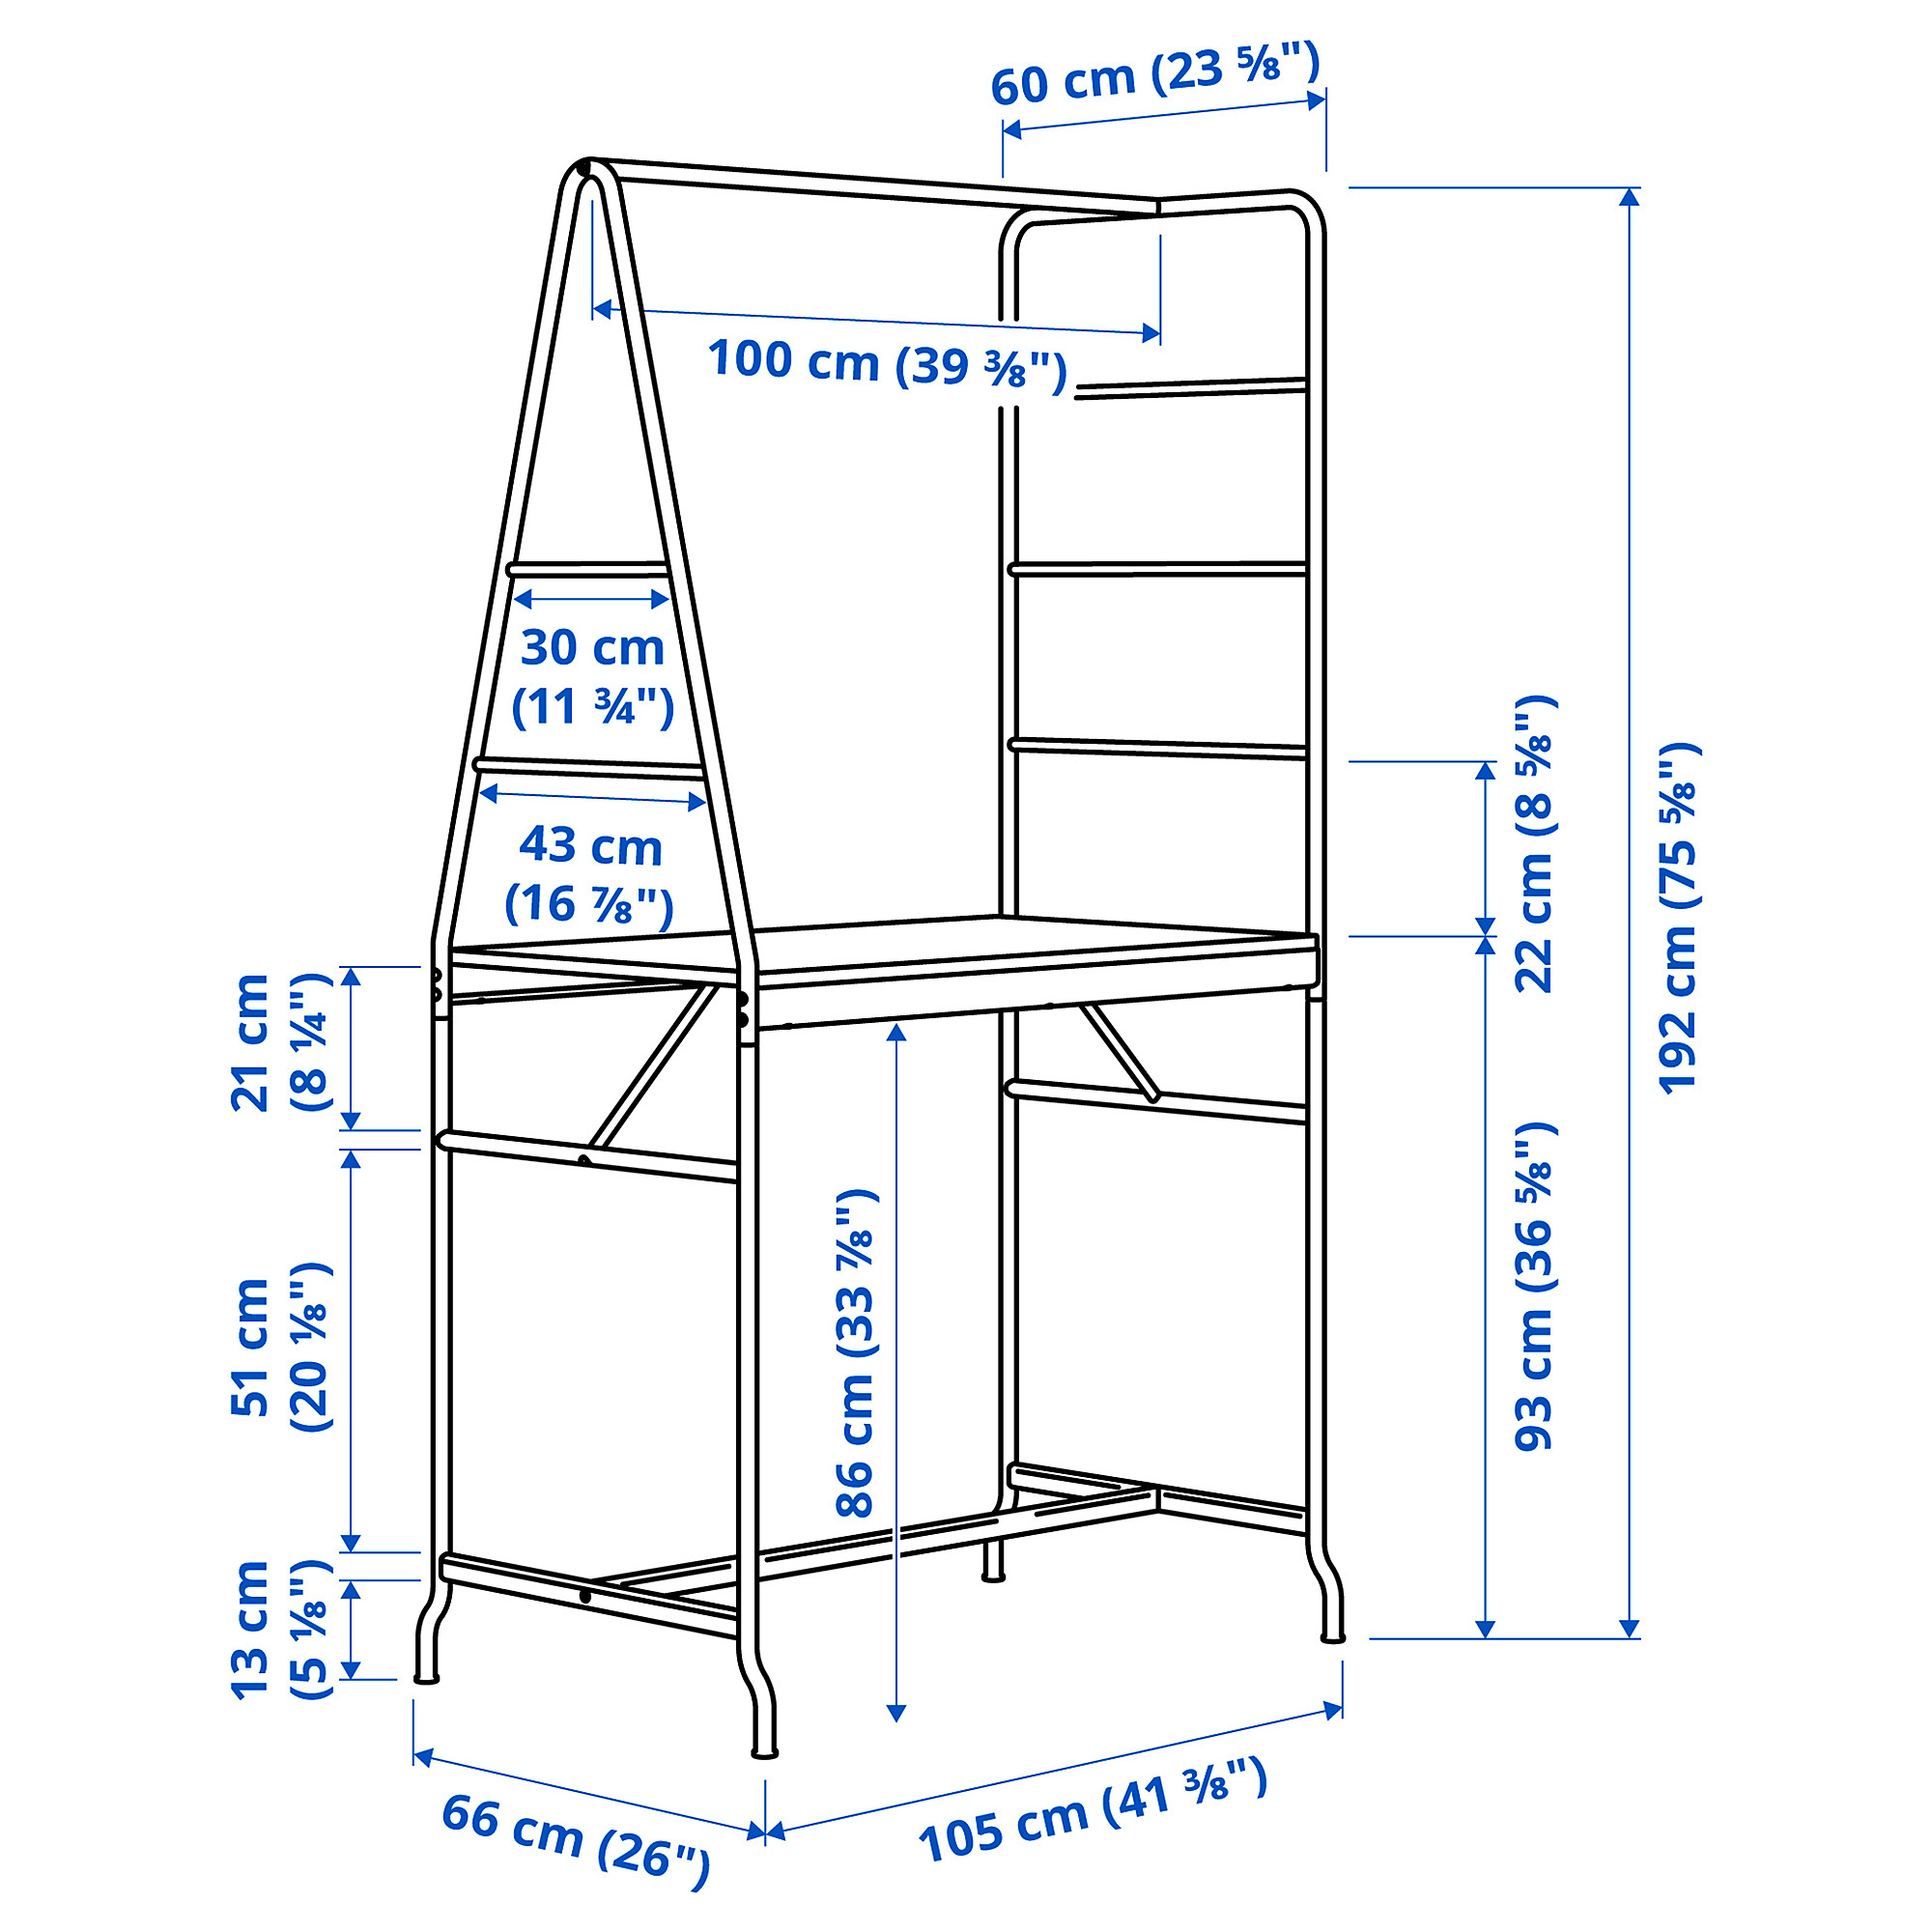 HÅVERUD table with storage ladder